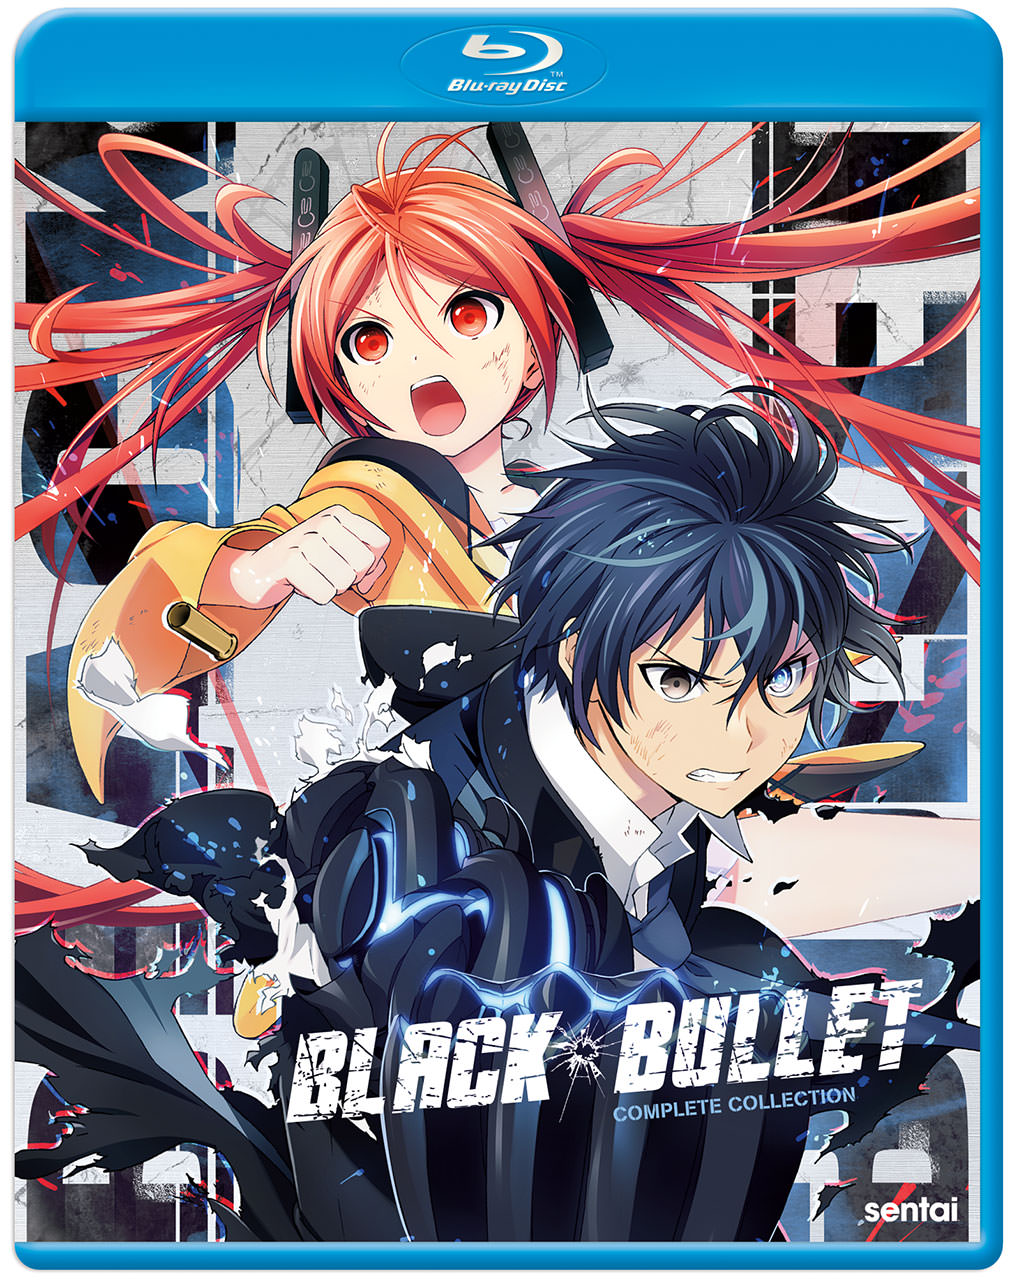 'Black Bullet' Blu-ray Cover Art provided by Sentai Filmworks